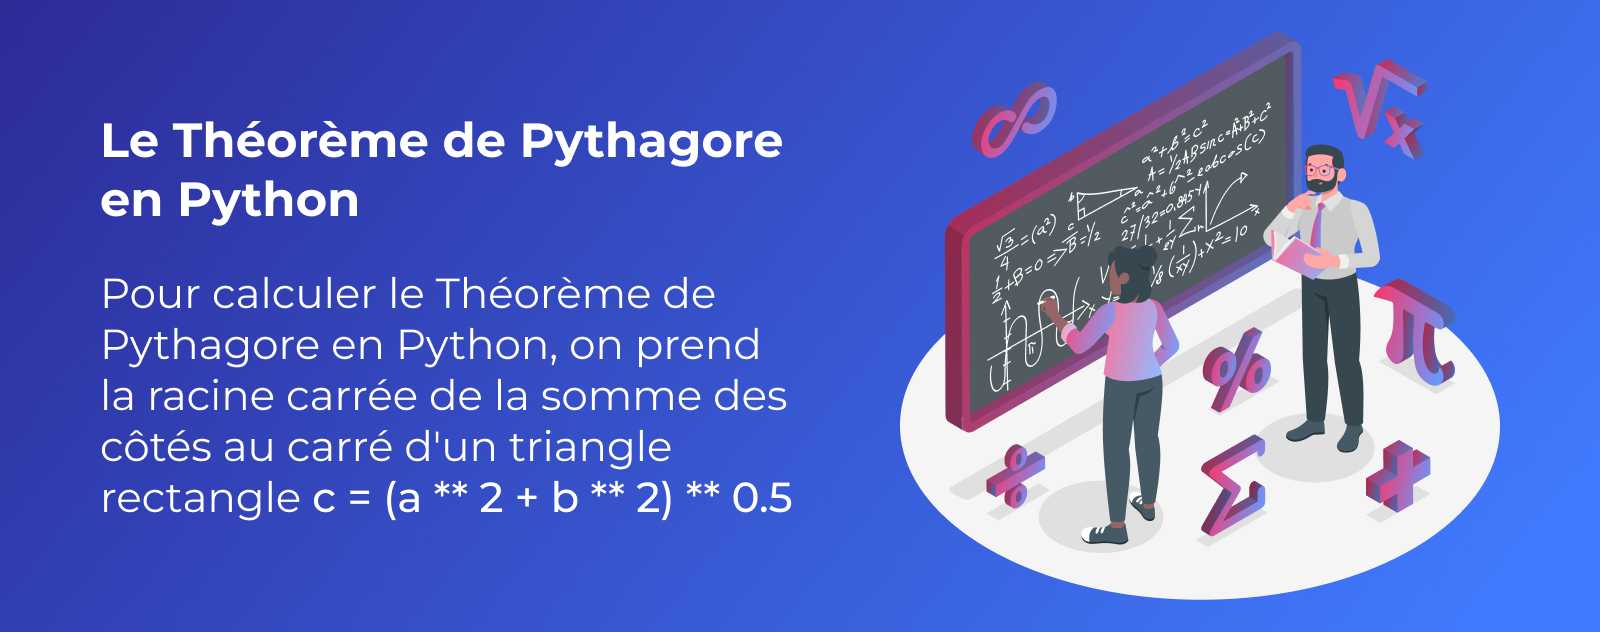 Le Théorème de Pythagore en Python